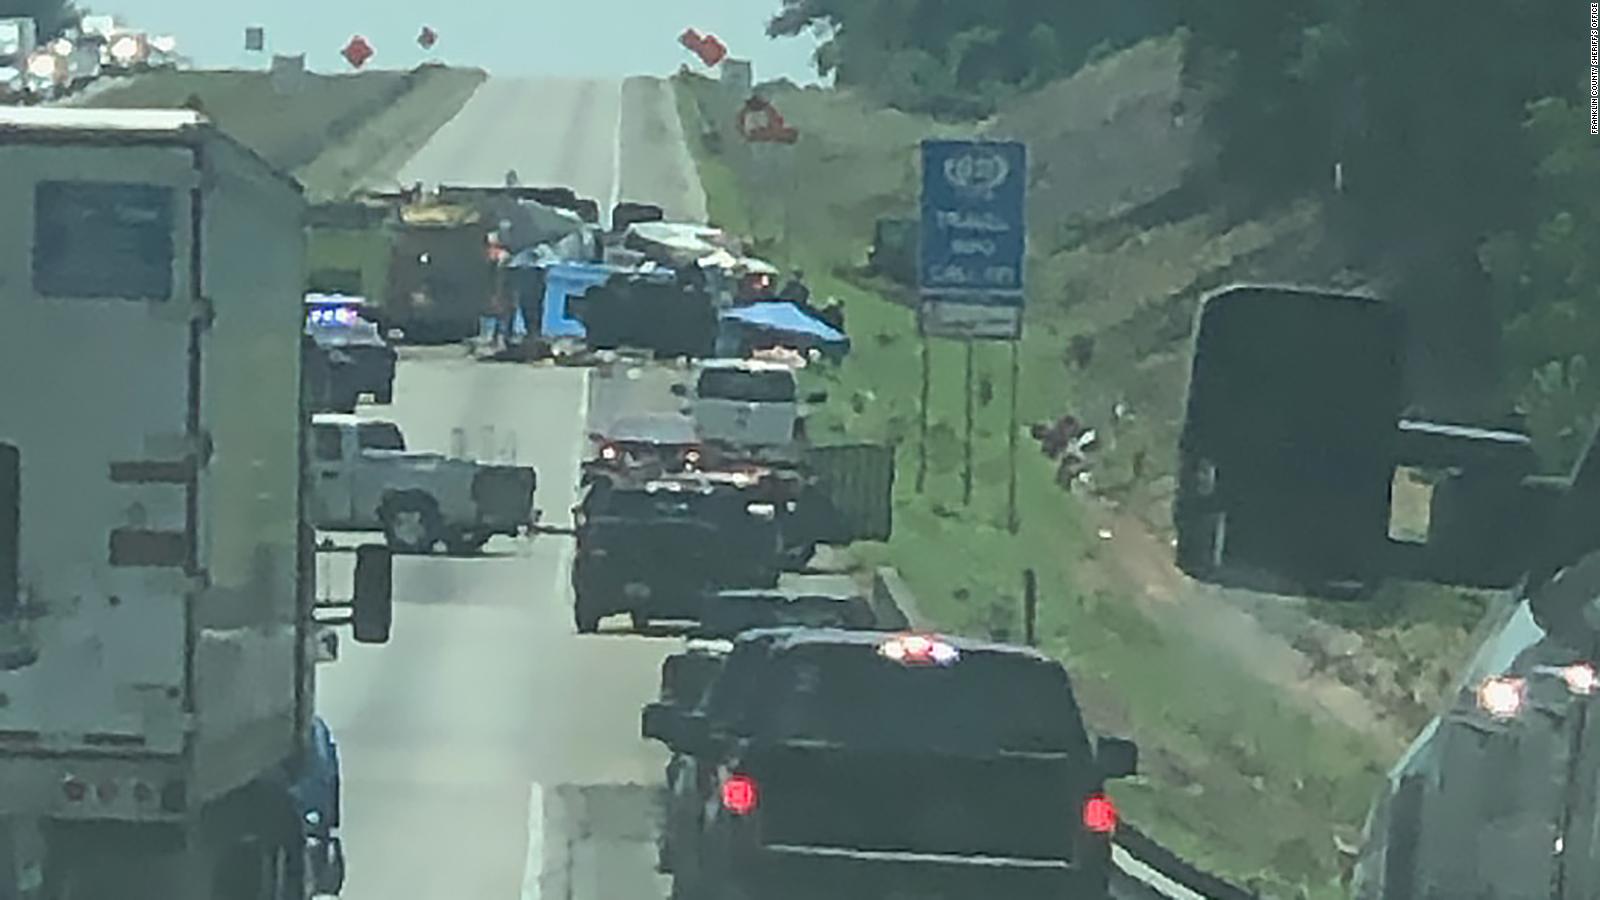 Wrongway car crash on highway leaves 7 dead CNN